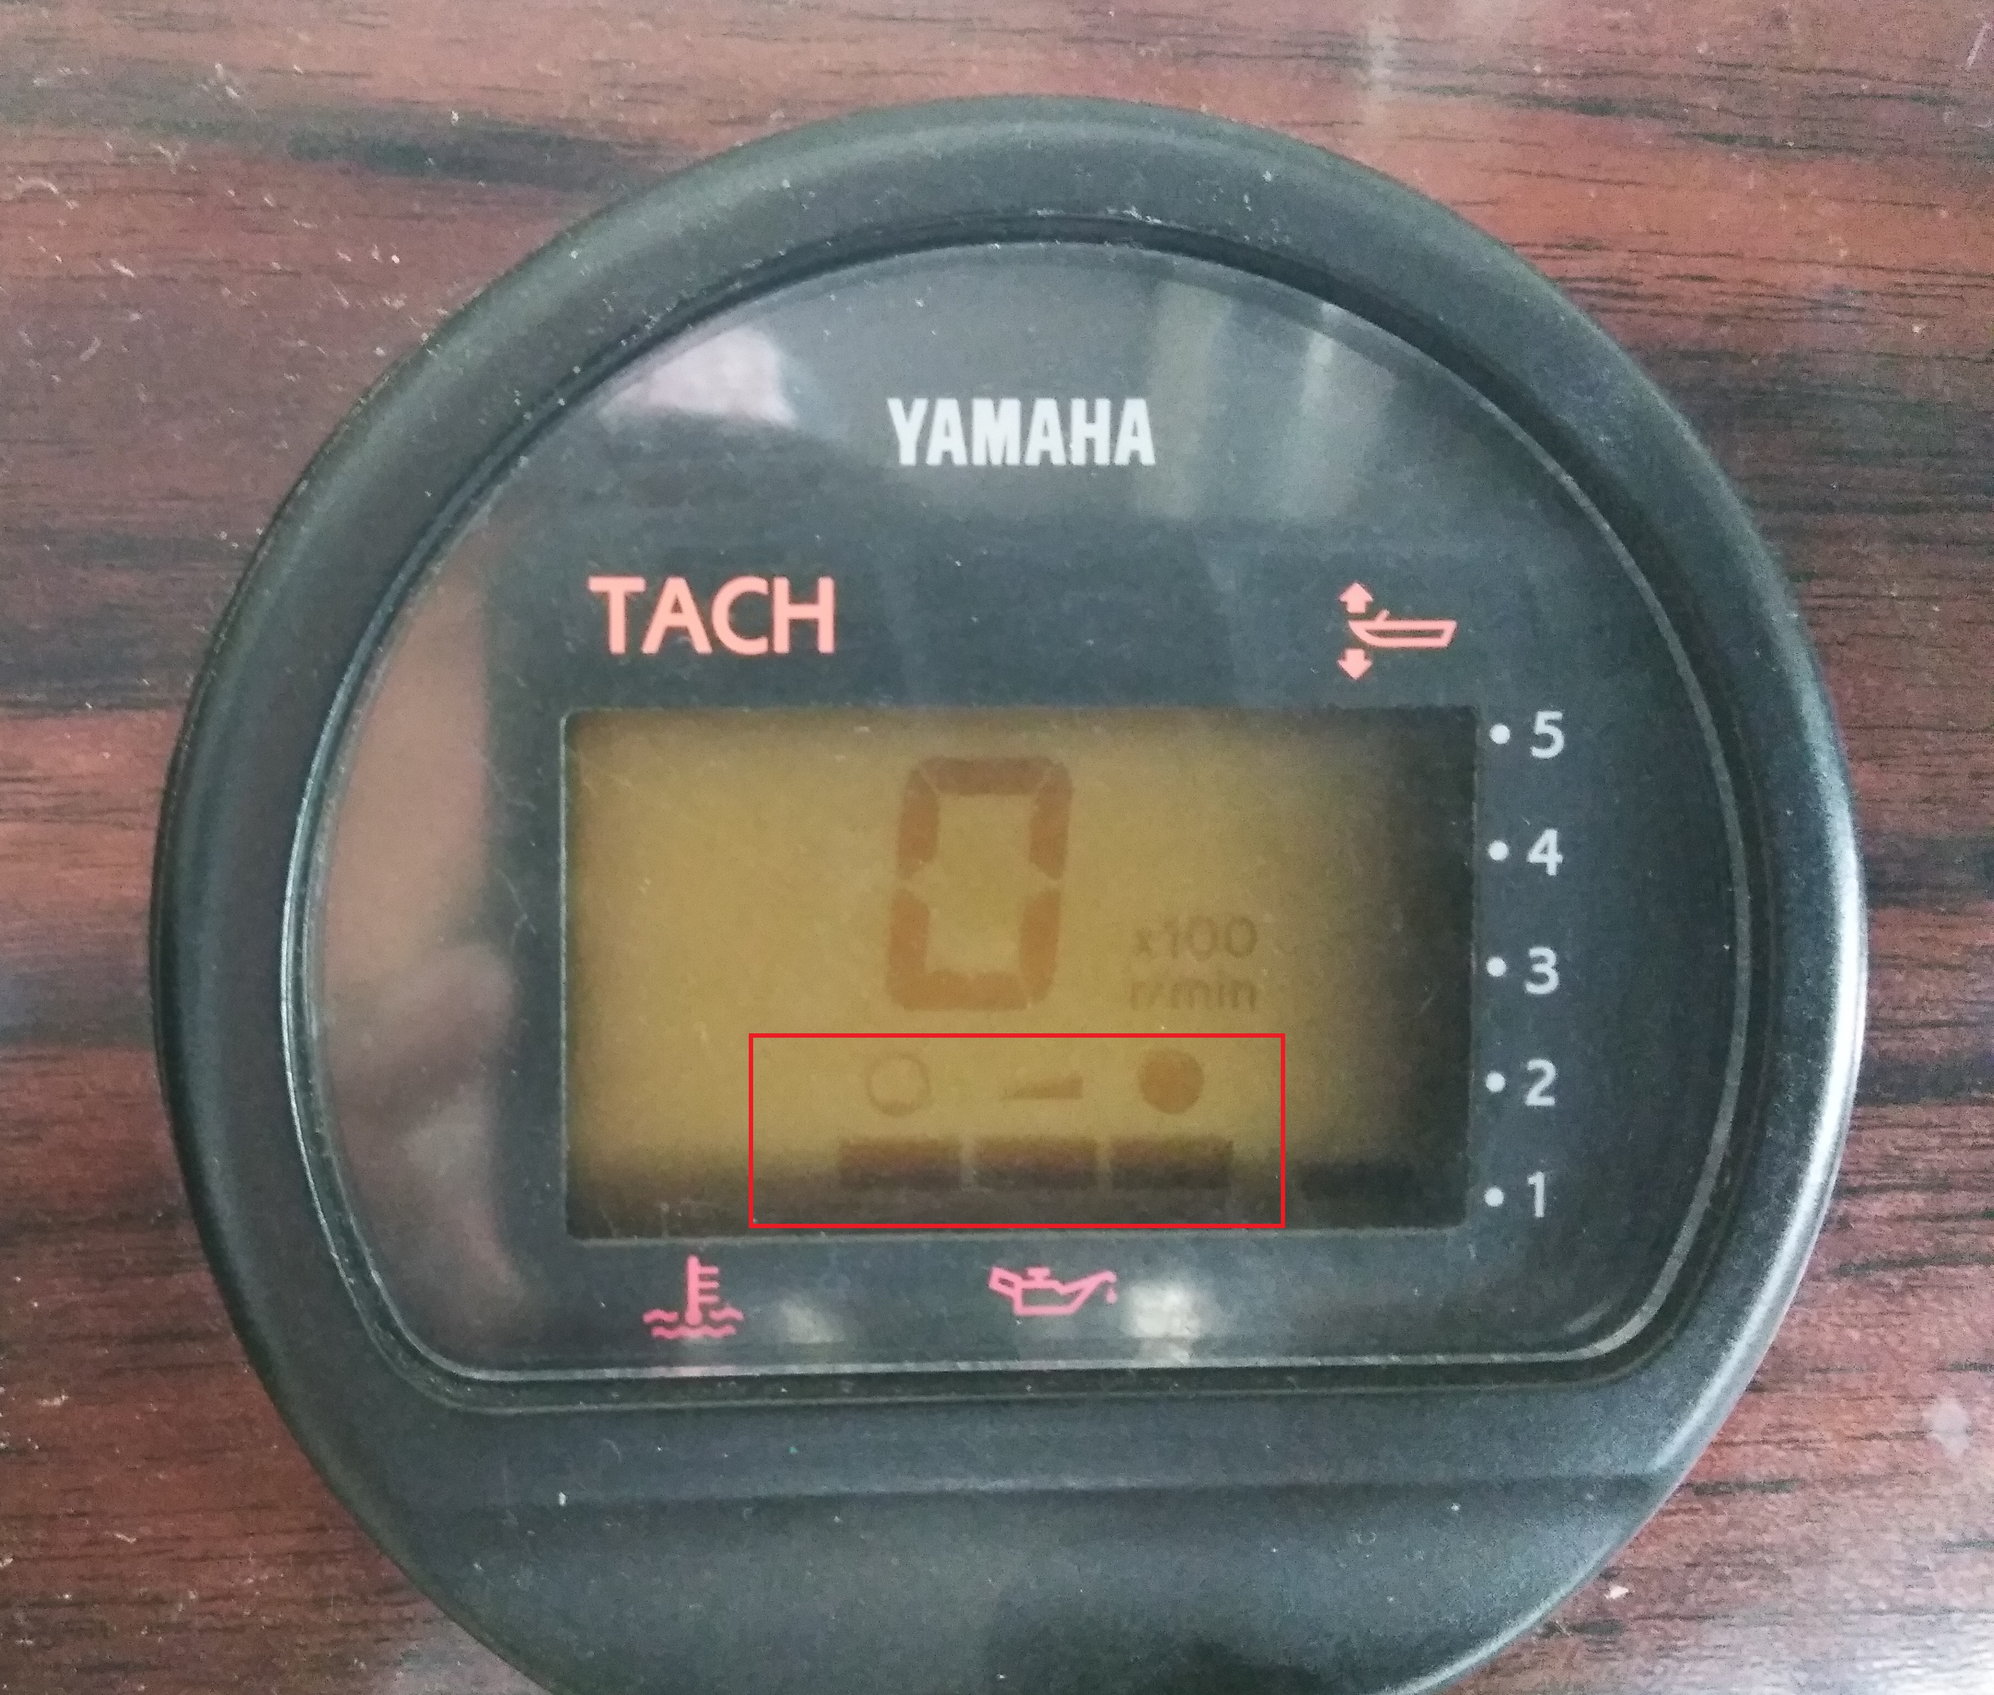 Motor tachometer outboard yamaha Yamaha analogue